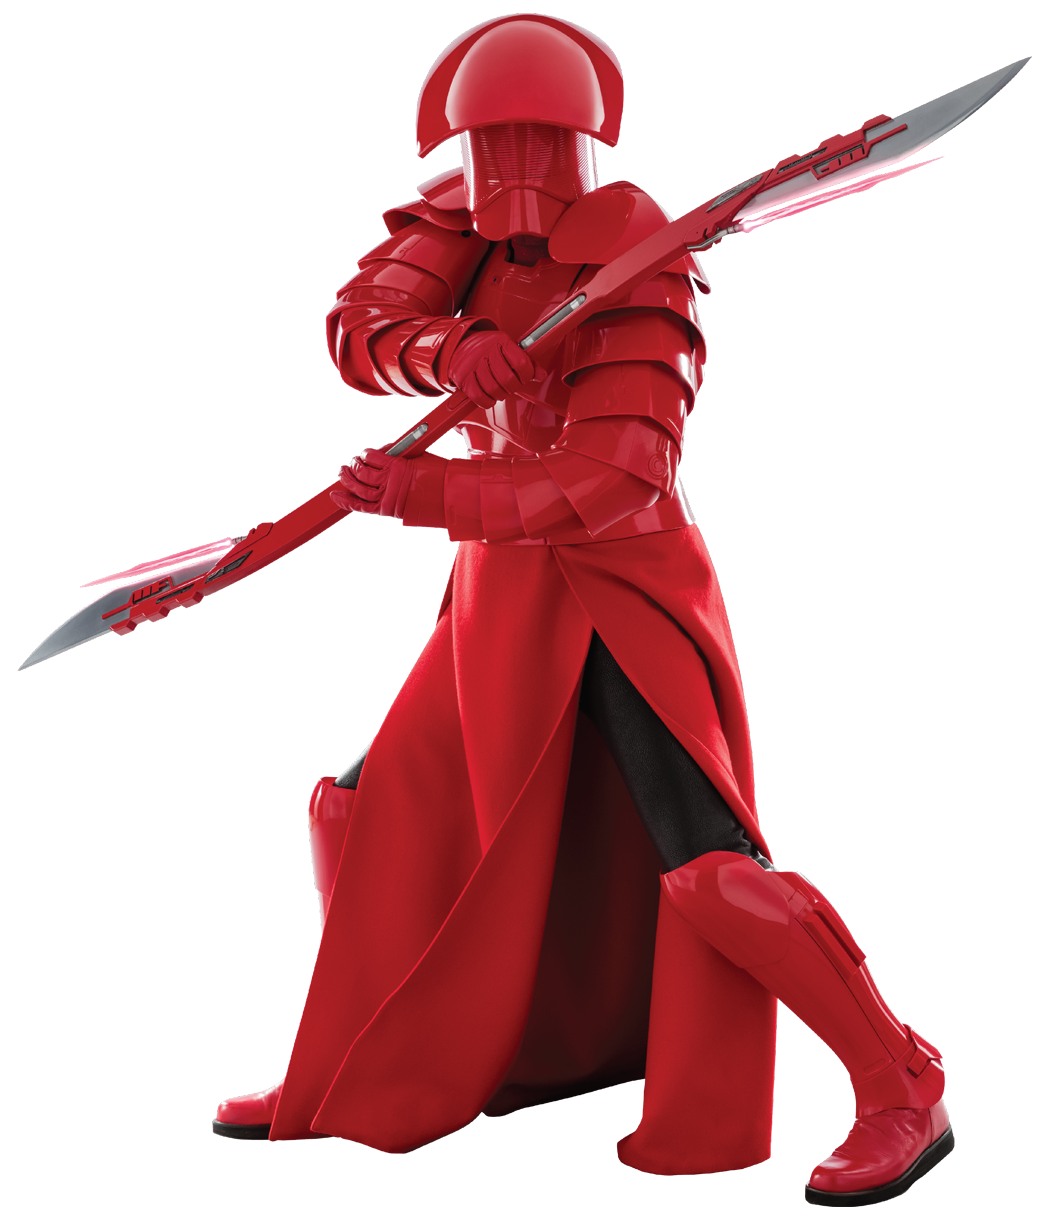 (Weapons D6 / Praetorian Guard Vibro-Bisento)